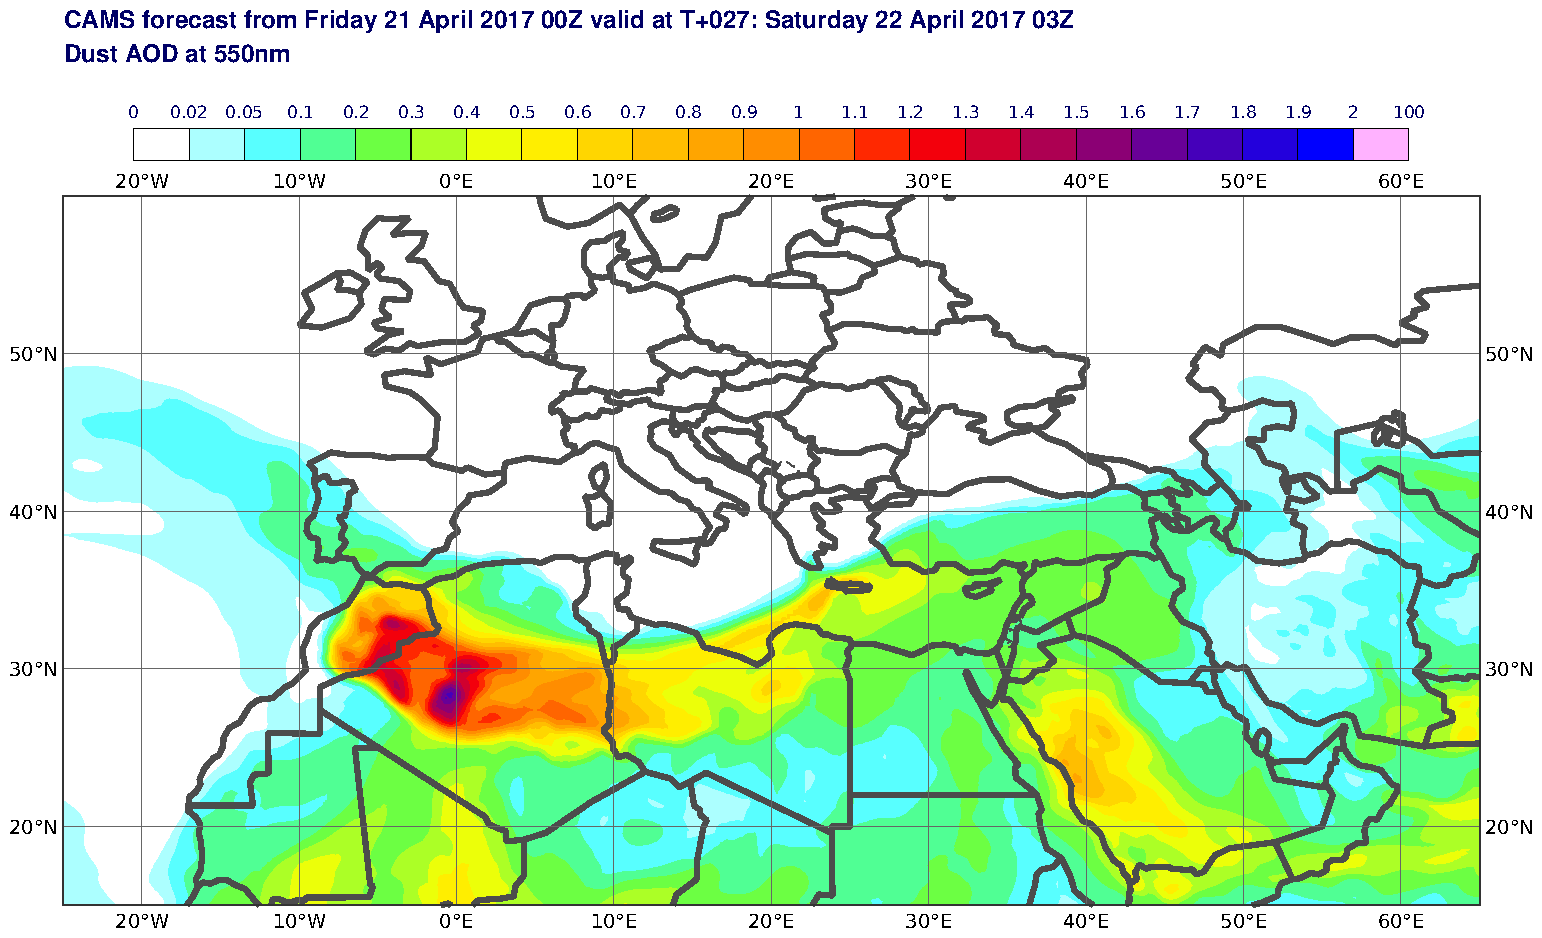 Dust AOD at 550nm valid at T27 - 2017-04-22 03:00